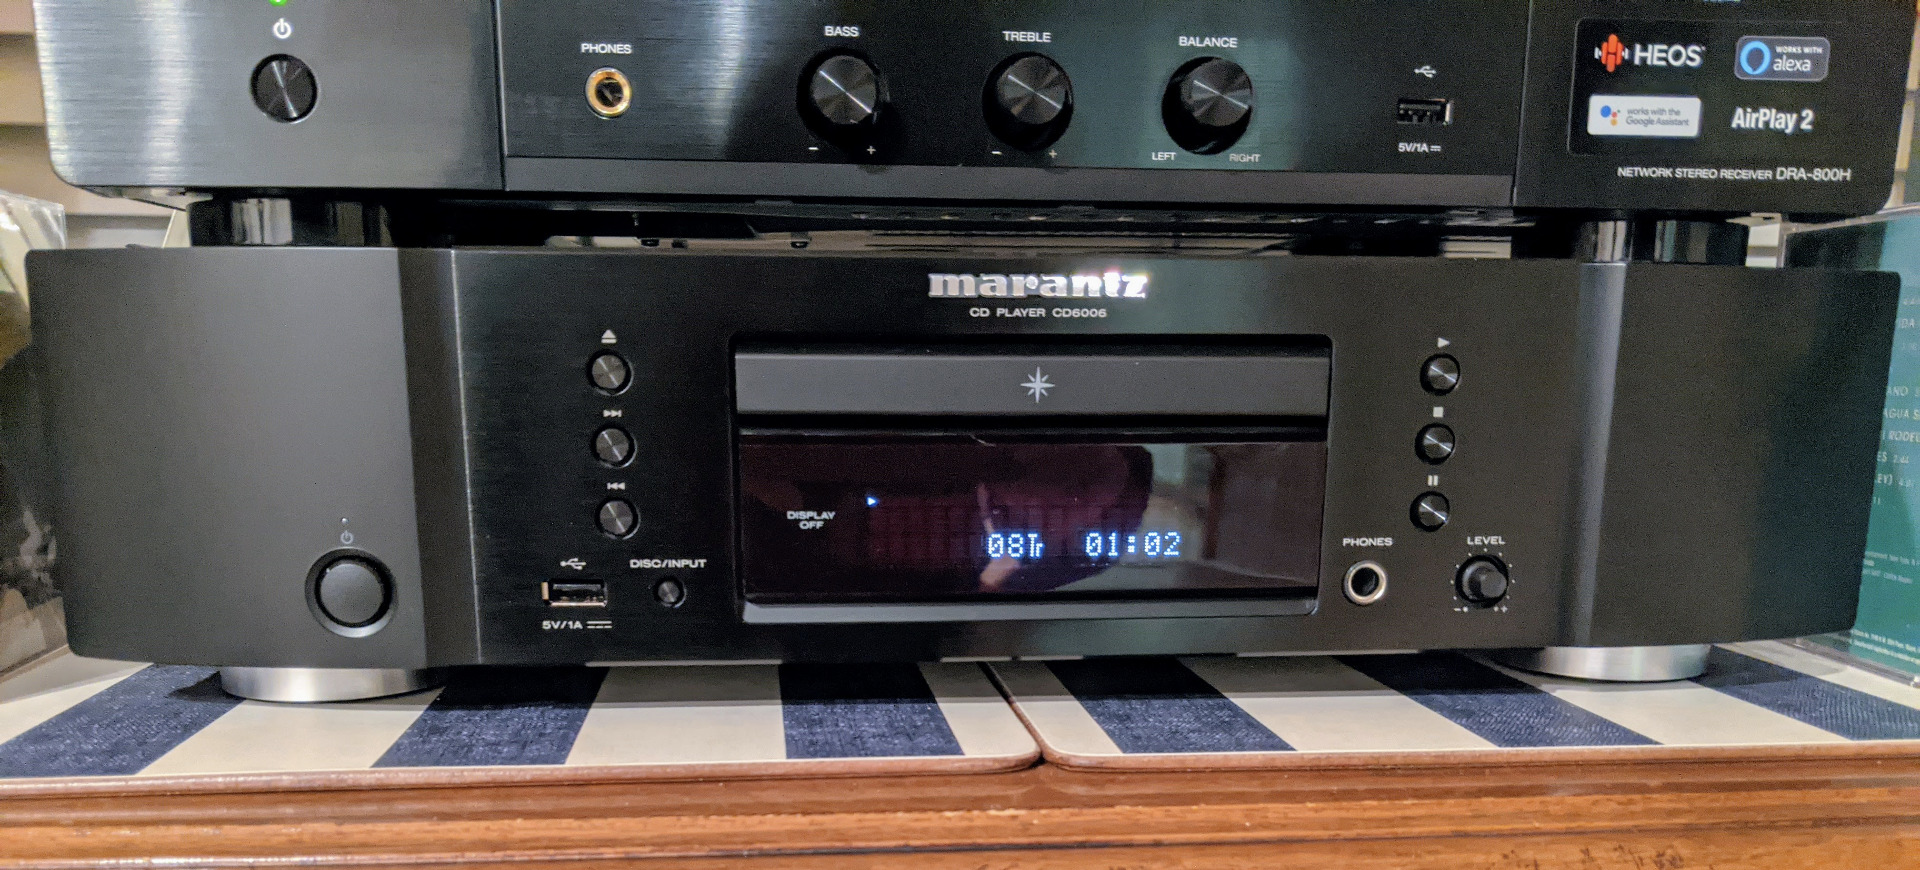 Customer Reviews: Marantz CD6007 Single-disc CD player with USB port for  thumb drives at Crutchfield